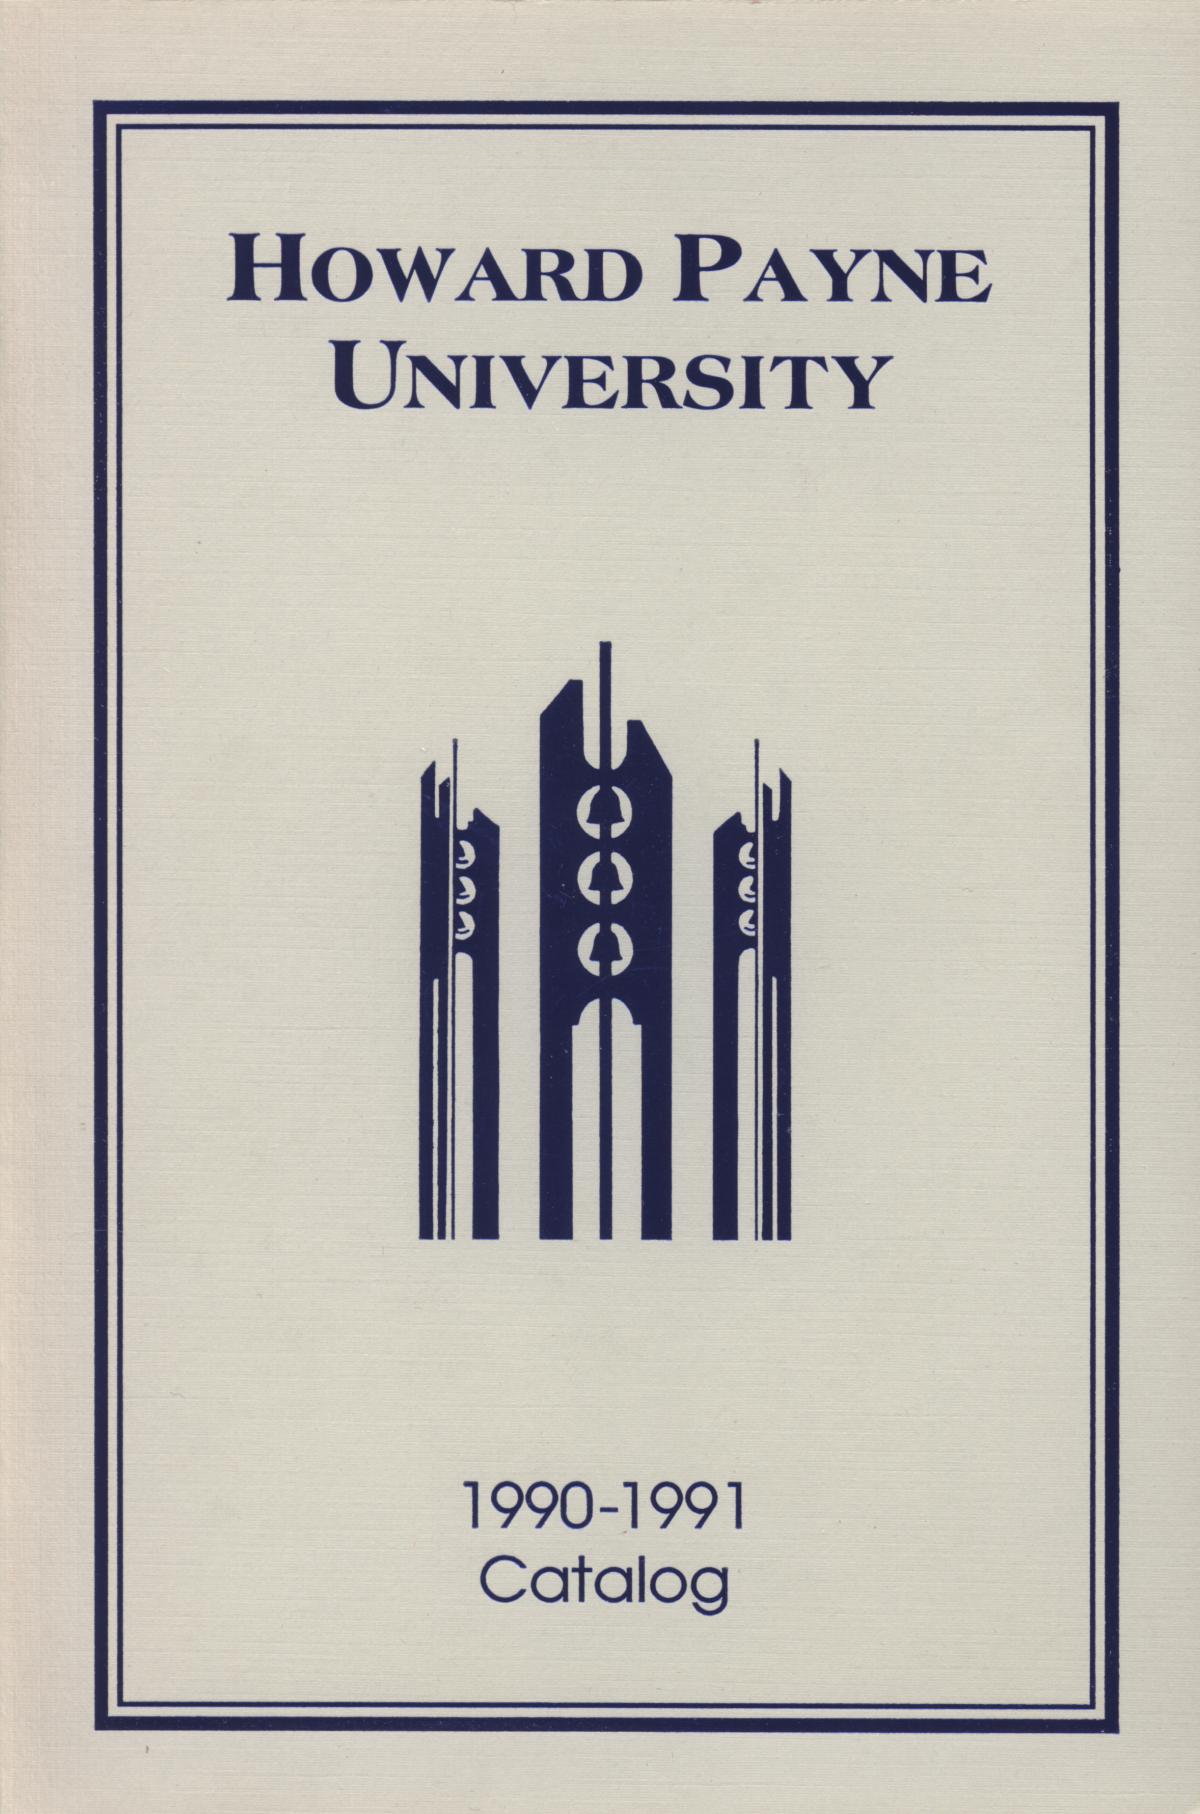 Catalog of Howard Payne University, 1990-1991
                                                
                                                    Front Cover
                                                